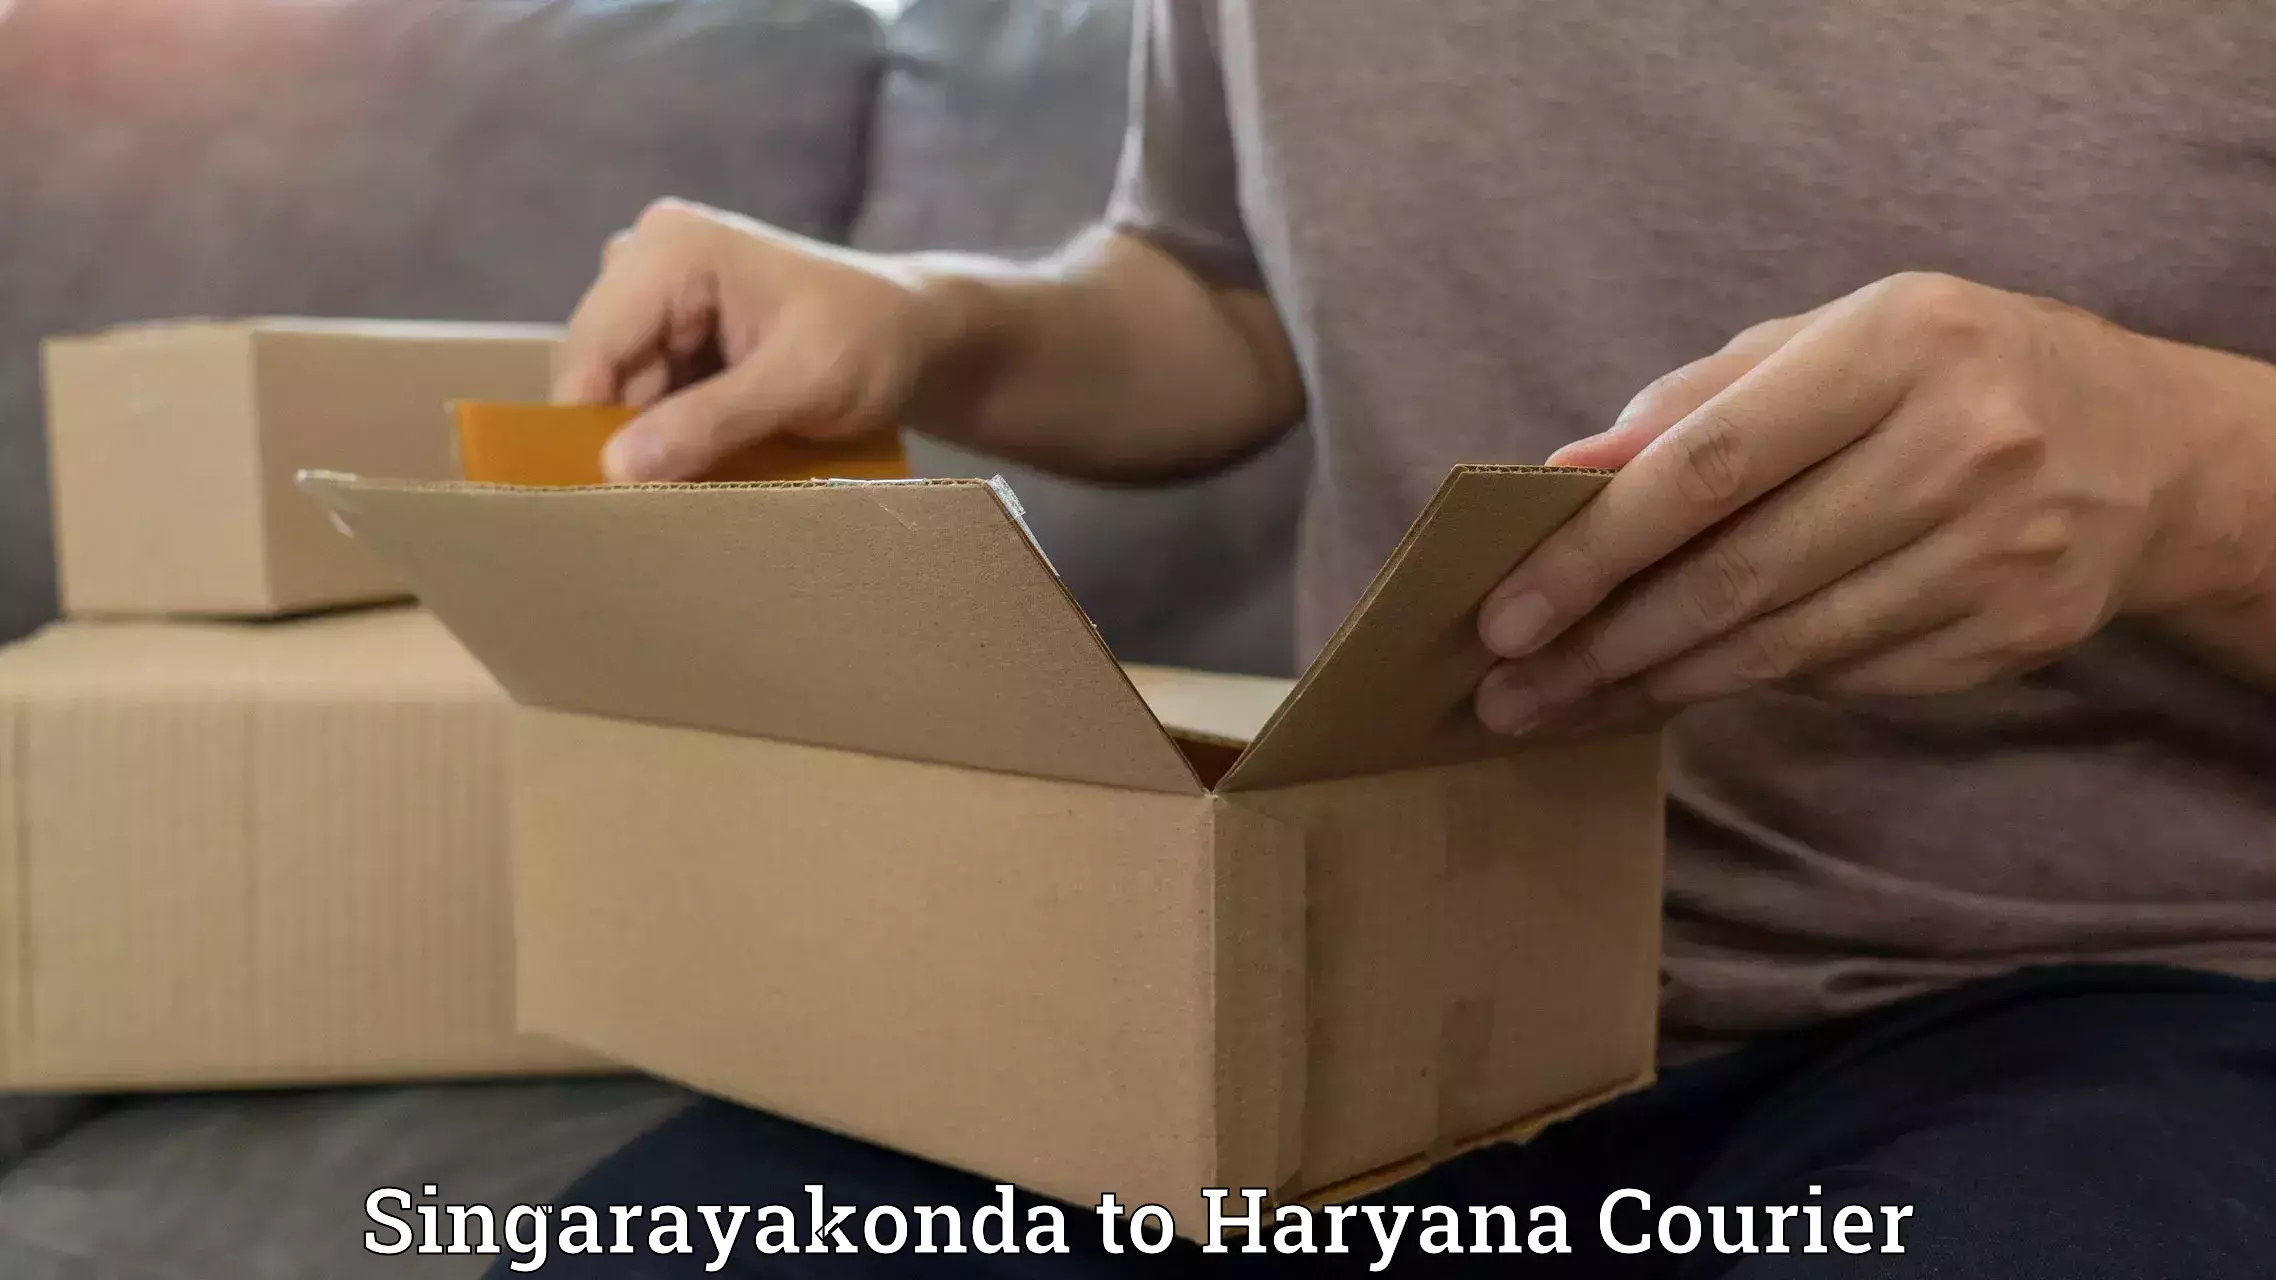 Enhanced tracking features Singarayakonda to Haryana